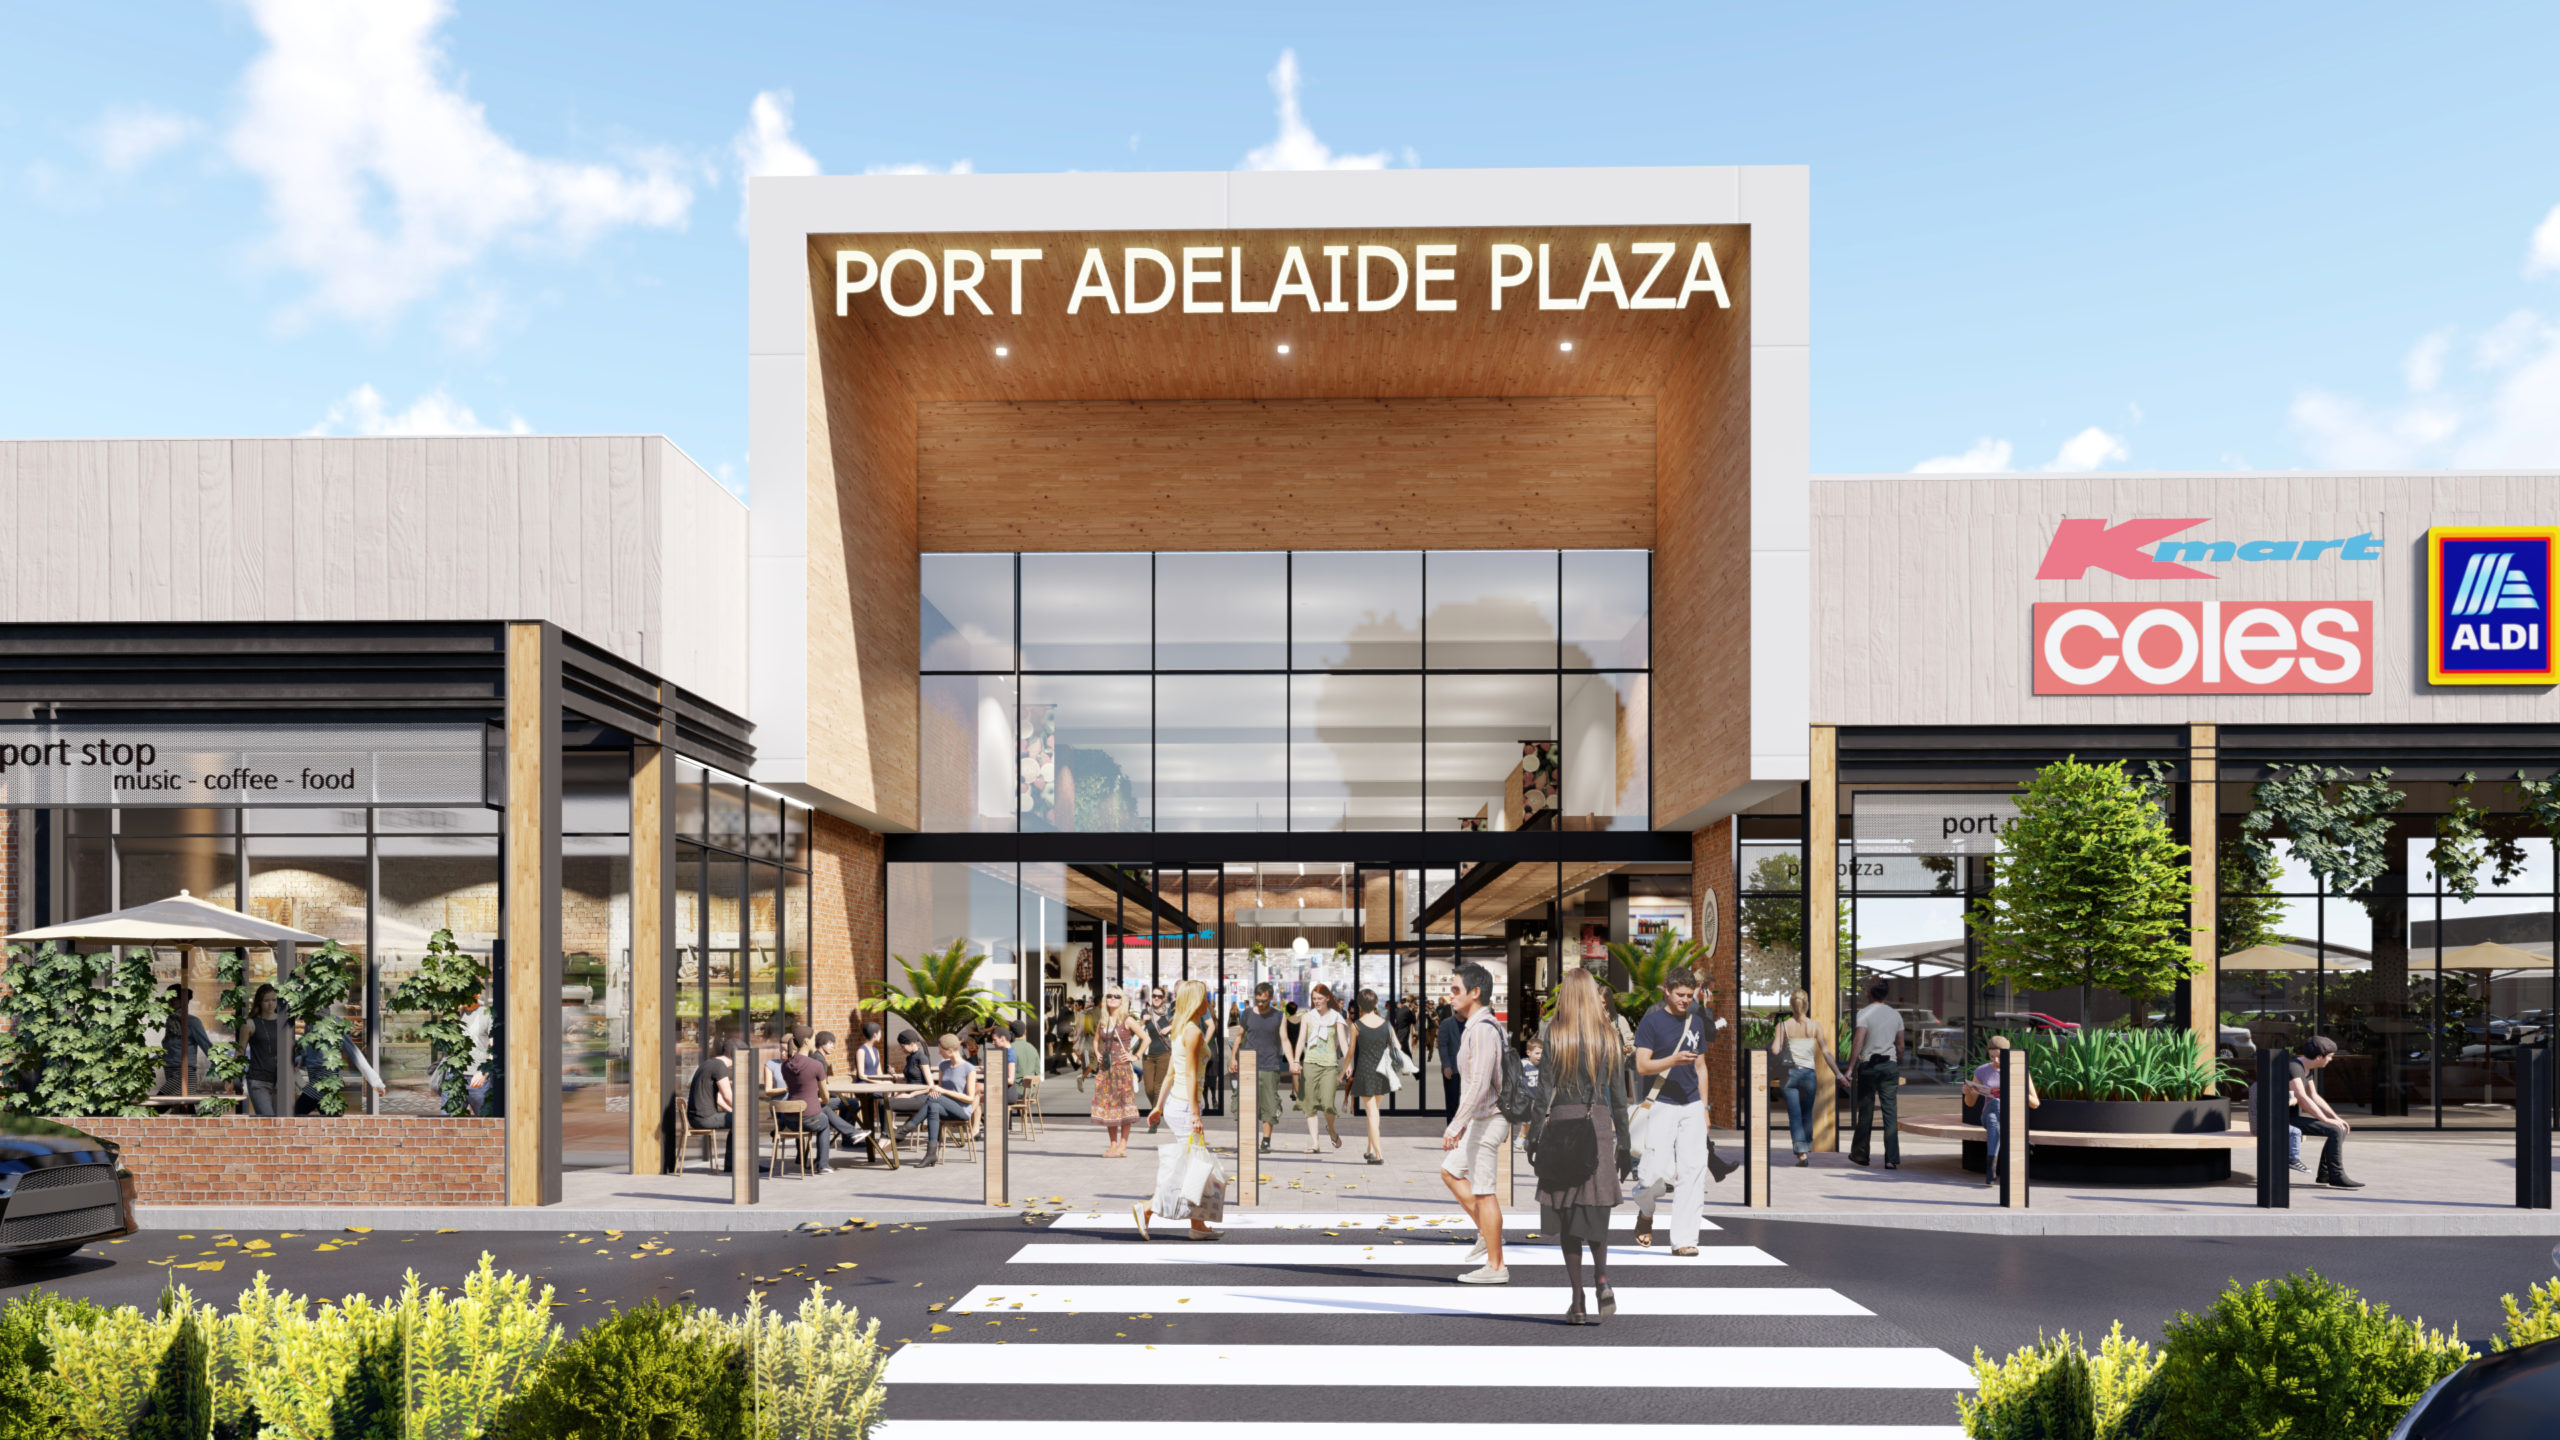 Port Adelaide Plaza